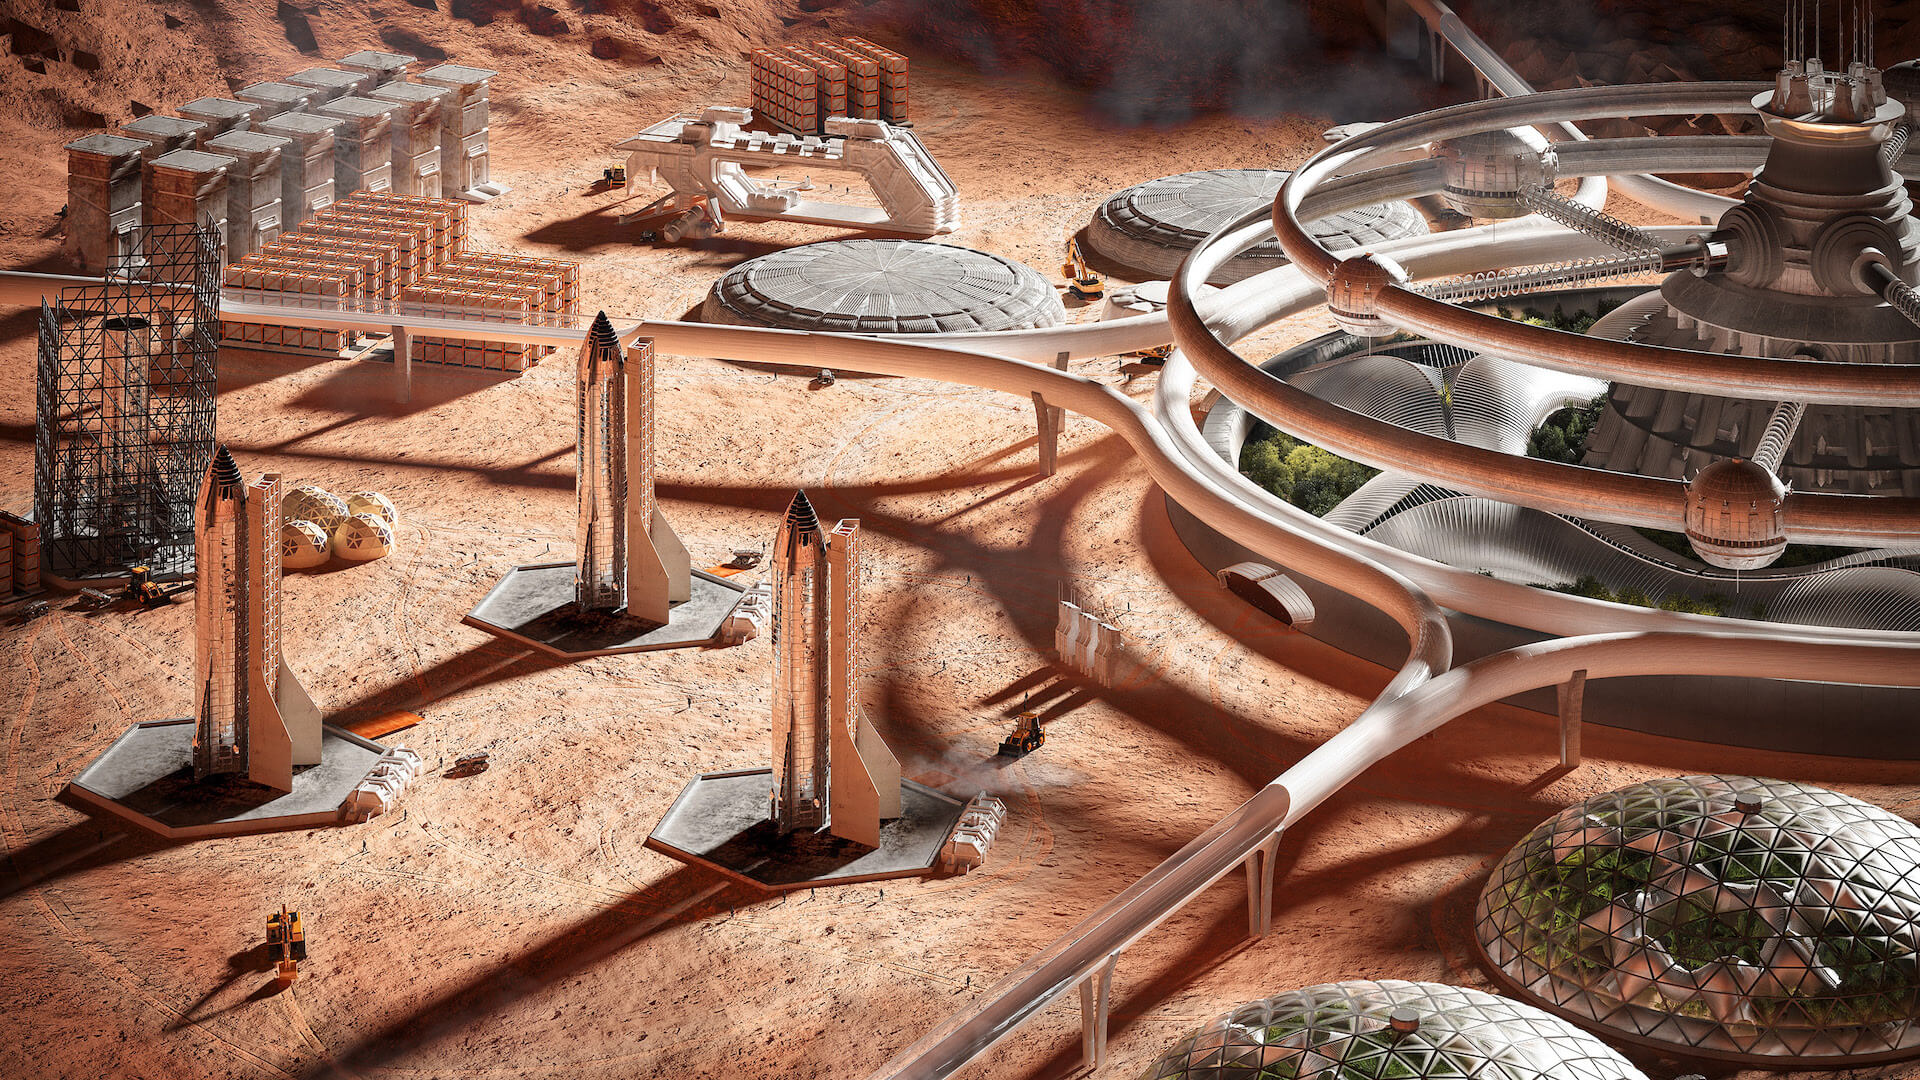 future mars base